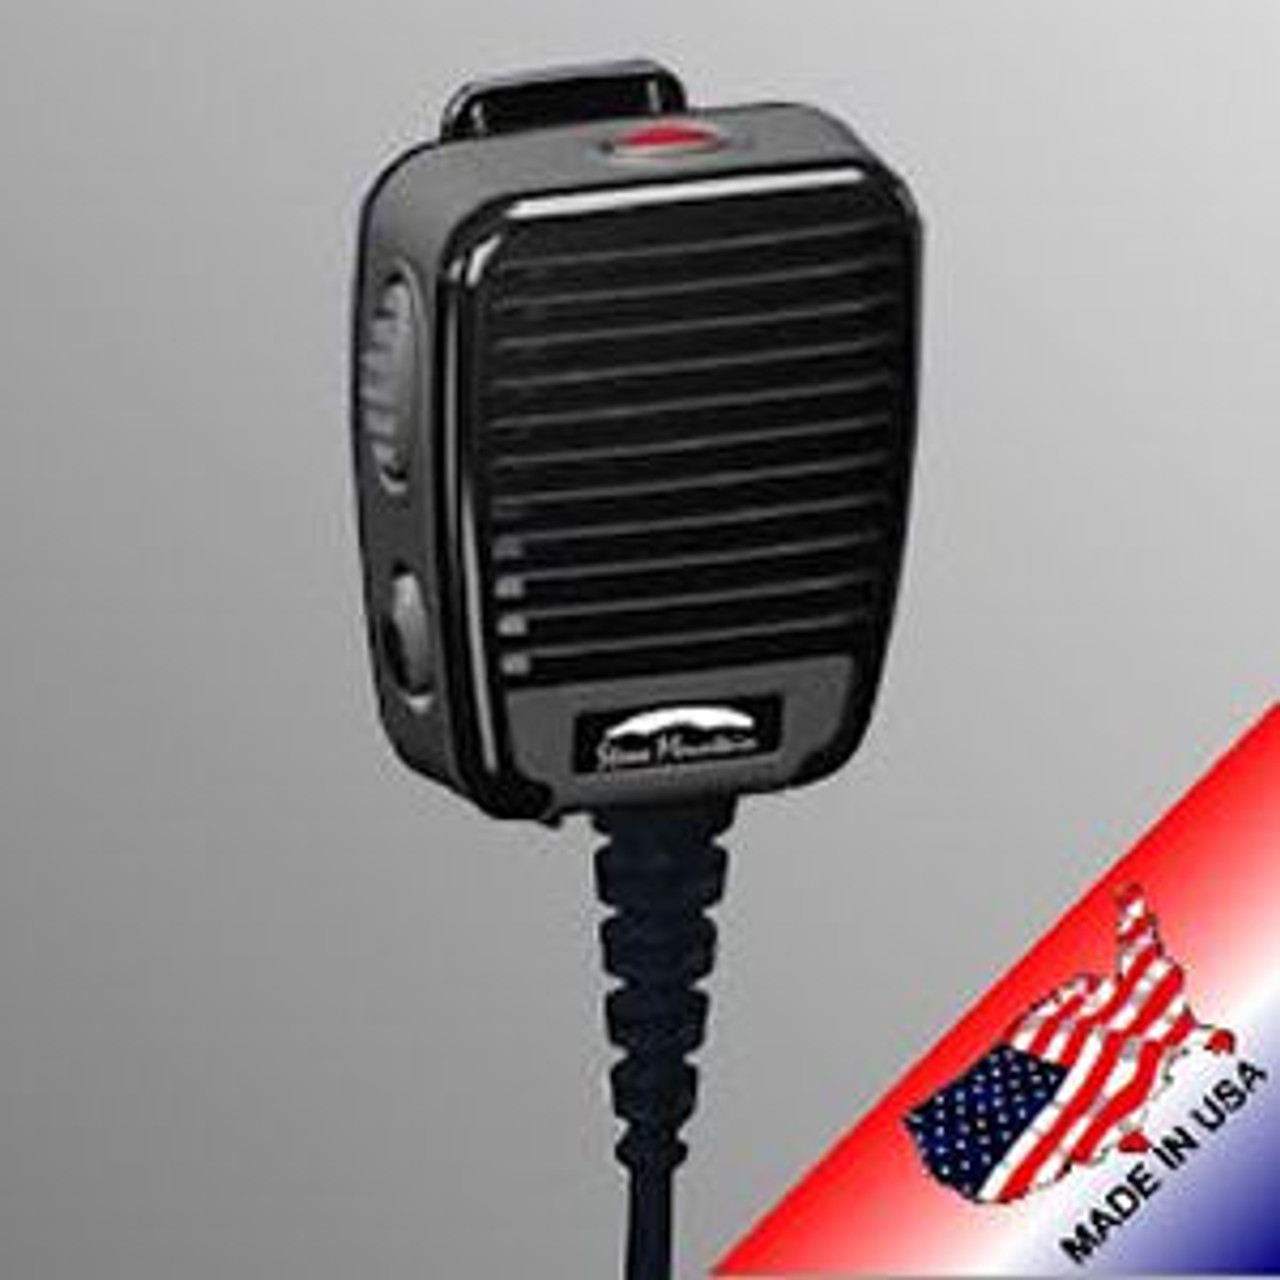 EF Johnson VP600 Federal Noise Canceling Ruggedized Waterproof IP68 High Volume Speaker Mic